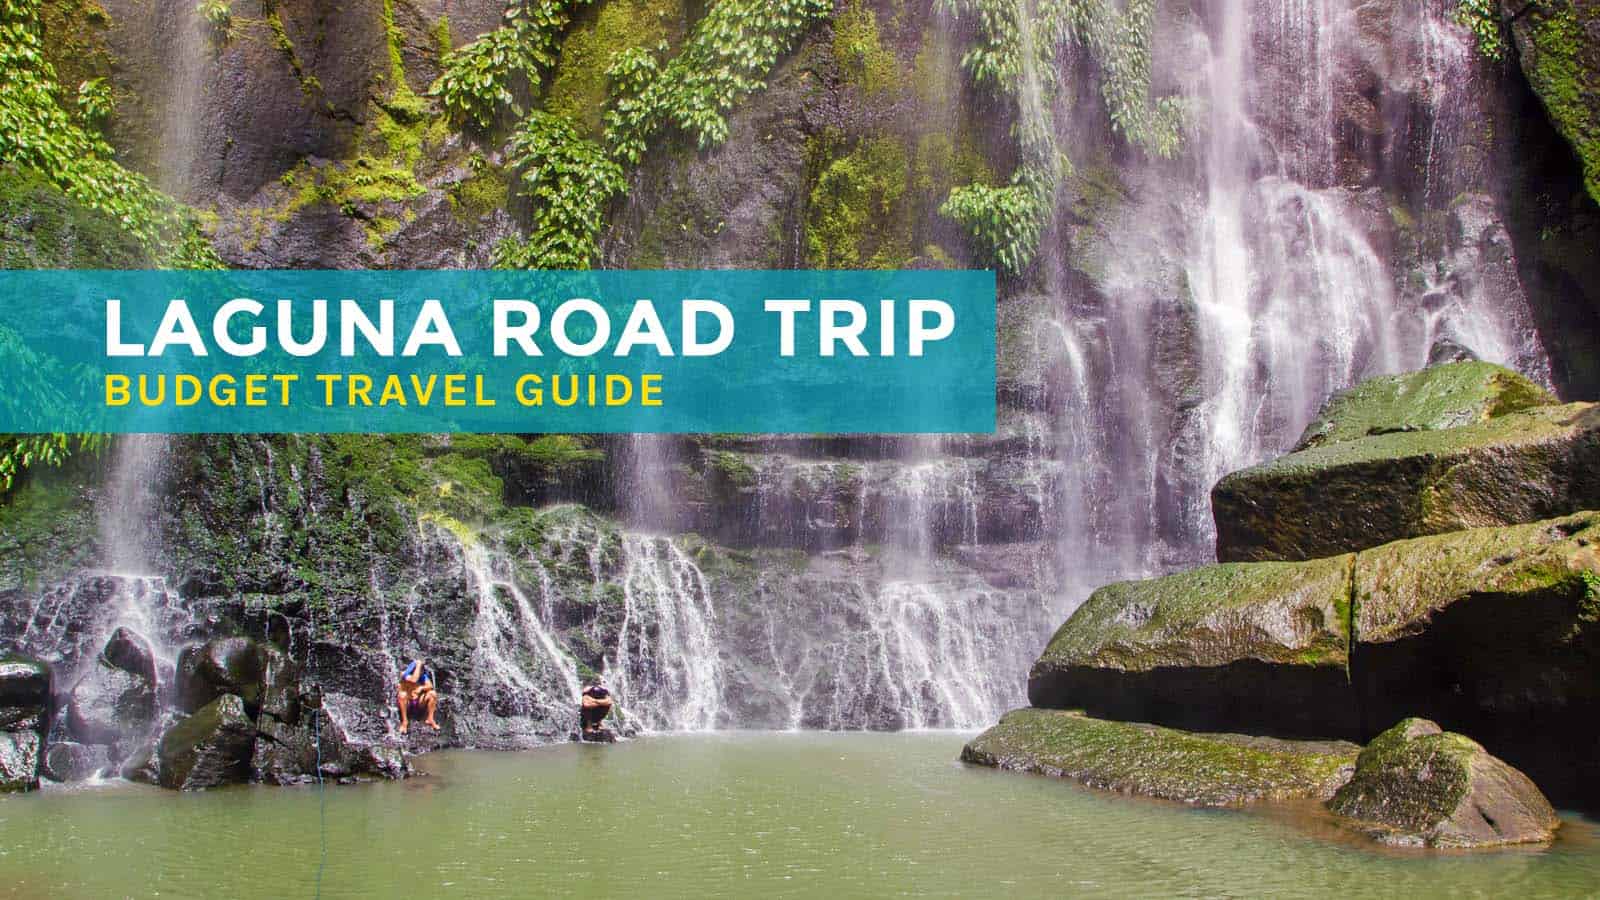 LAGUNA ROAD TRIP: Budget Travel Guide & Itinerary